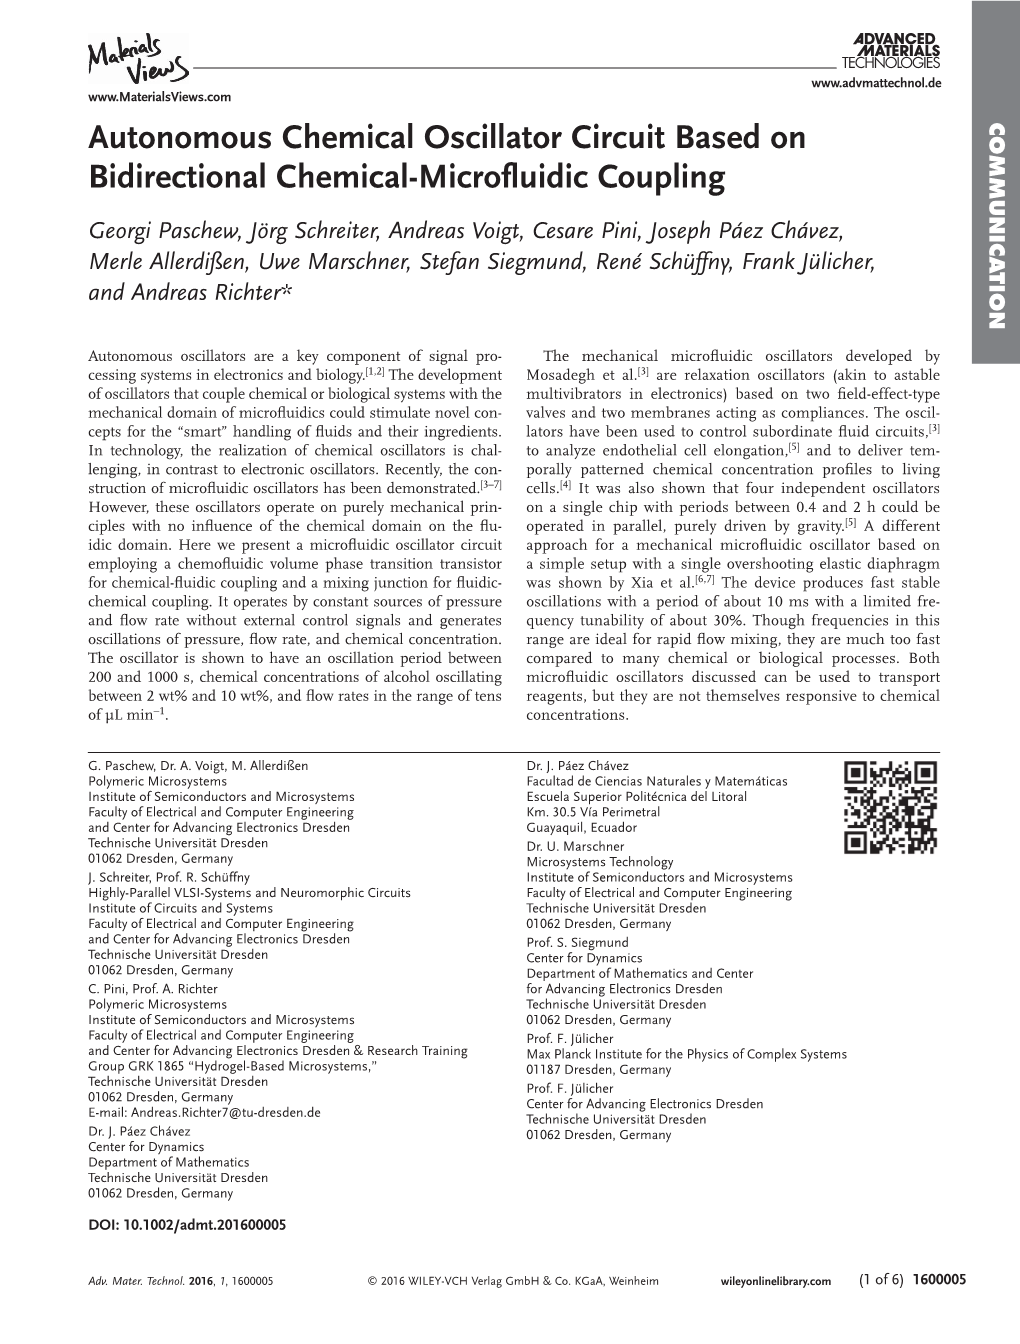 Autonomous Chemical Oscillator Circuit Based on Bidirectional